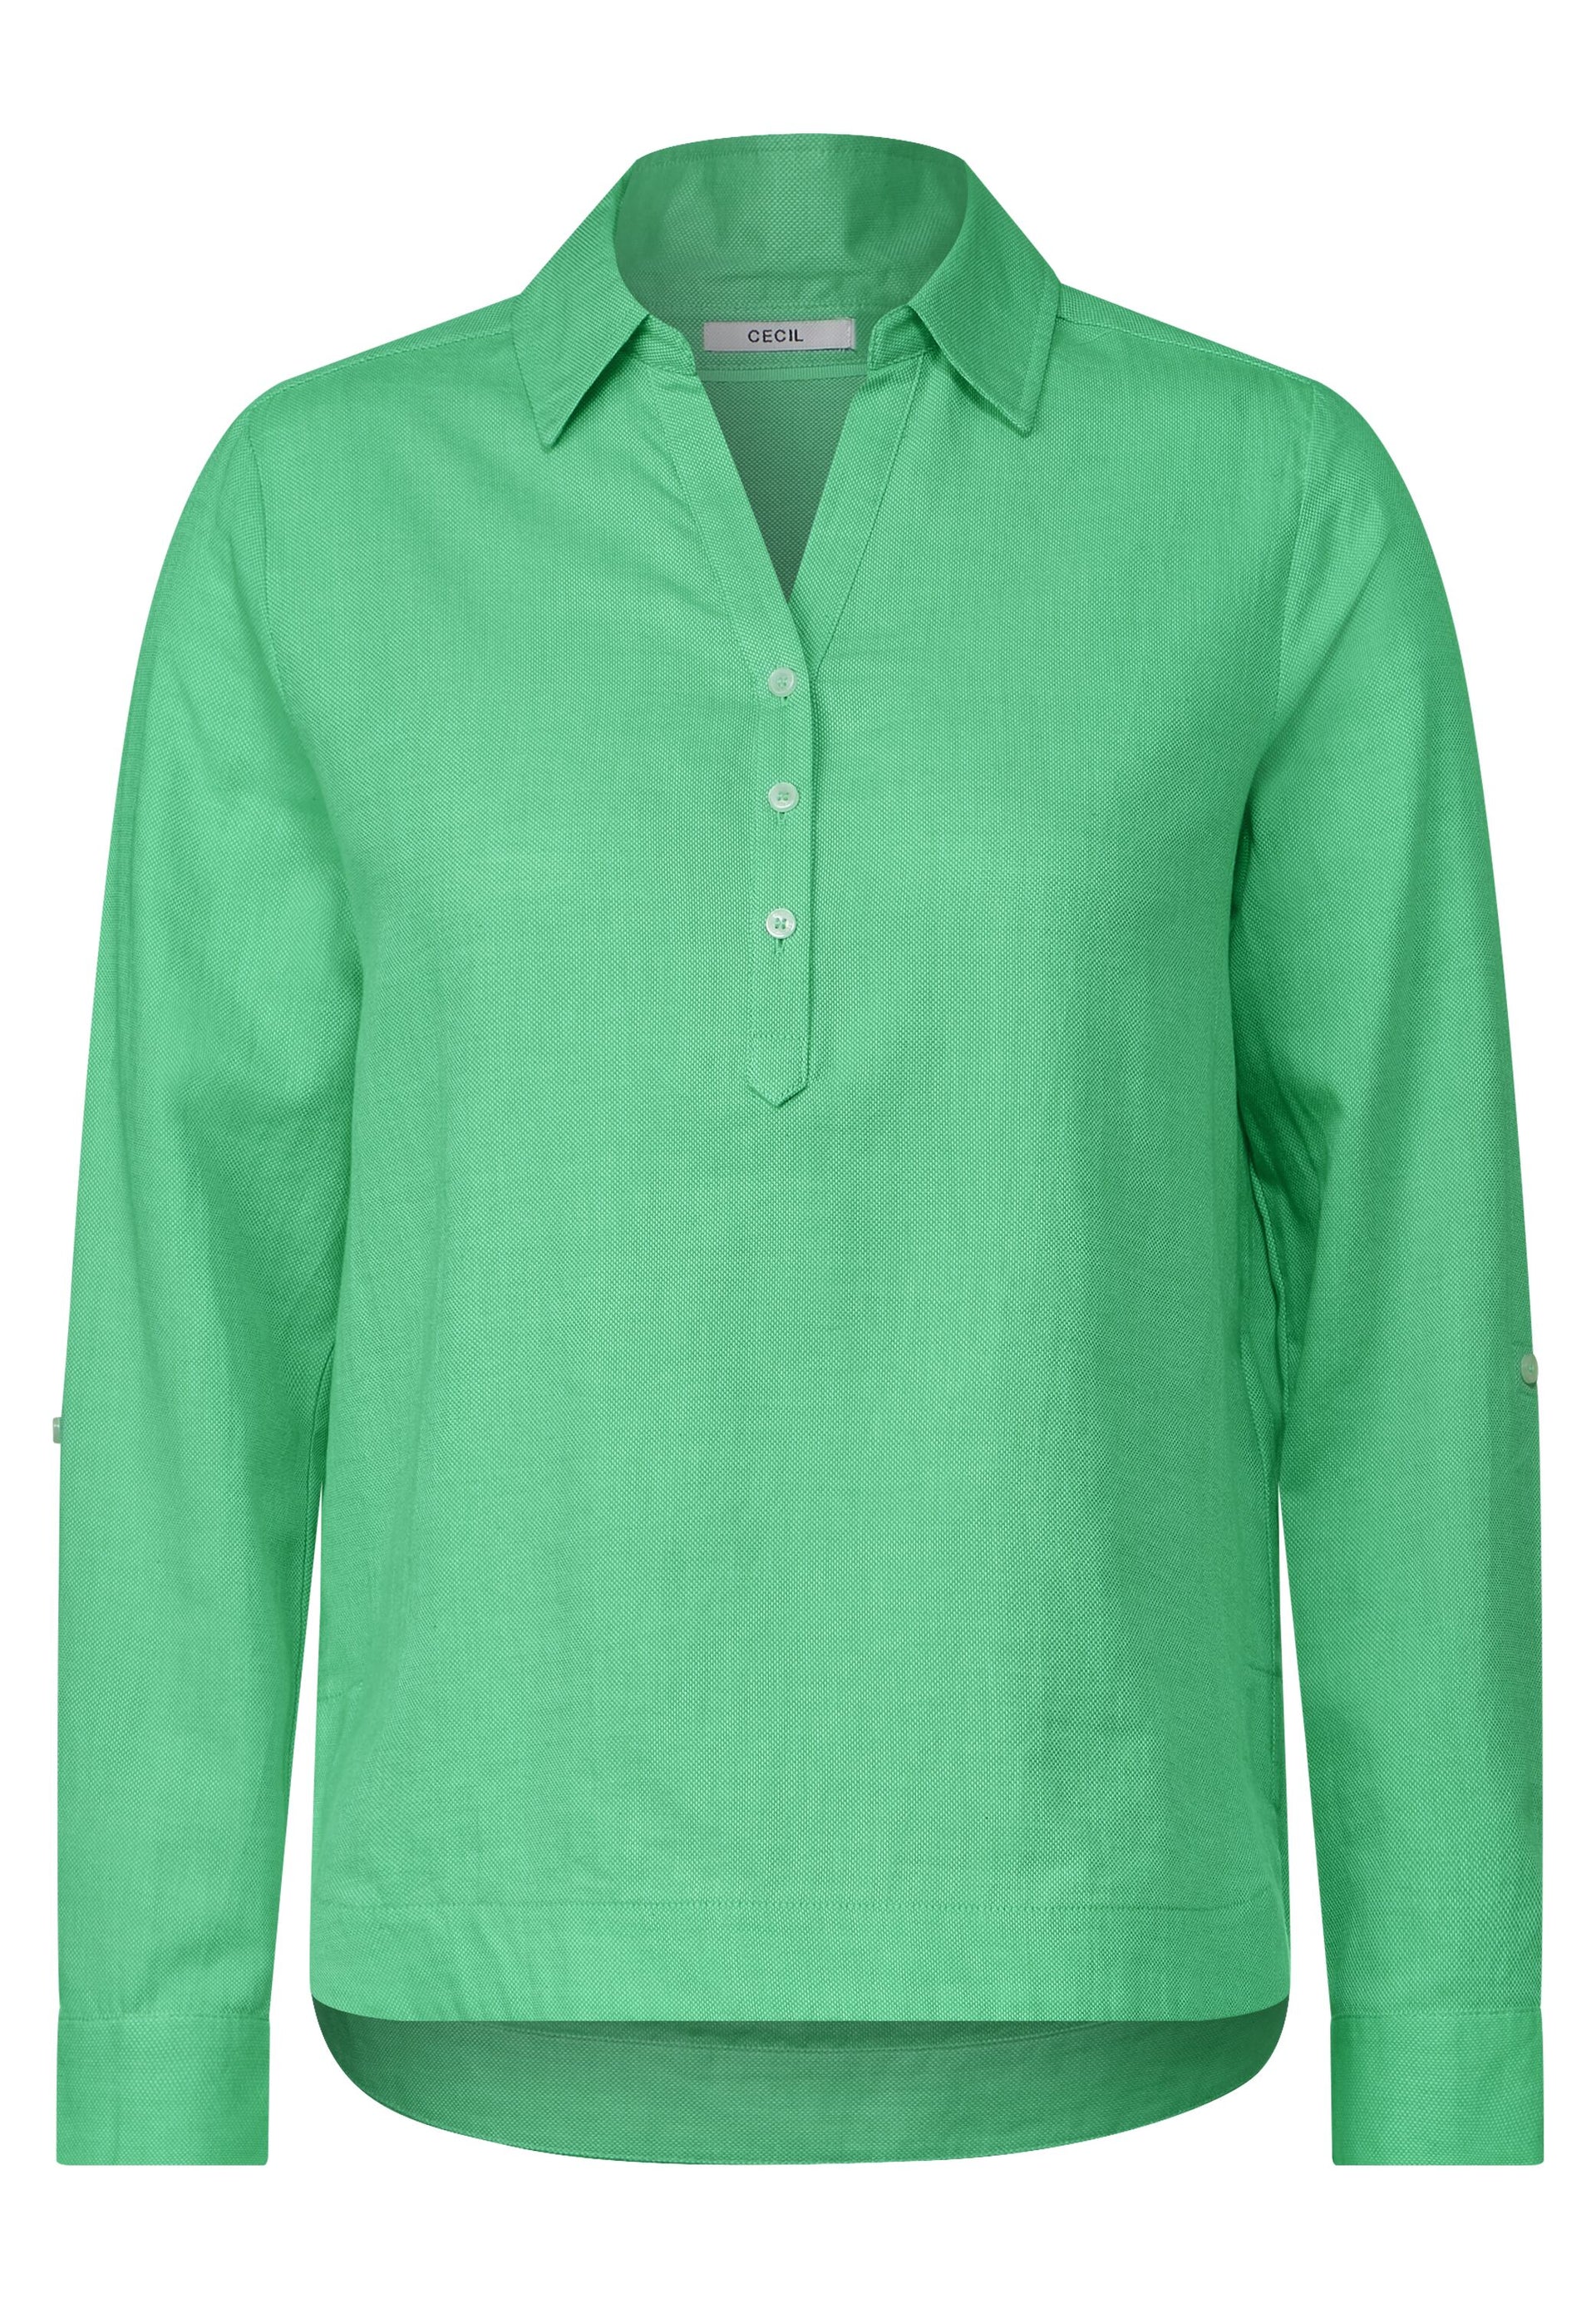 CECIL Damen Bluse - – angesagtem im TWISTY Grünton Mode Hemdbluse